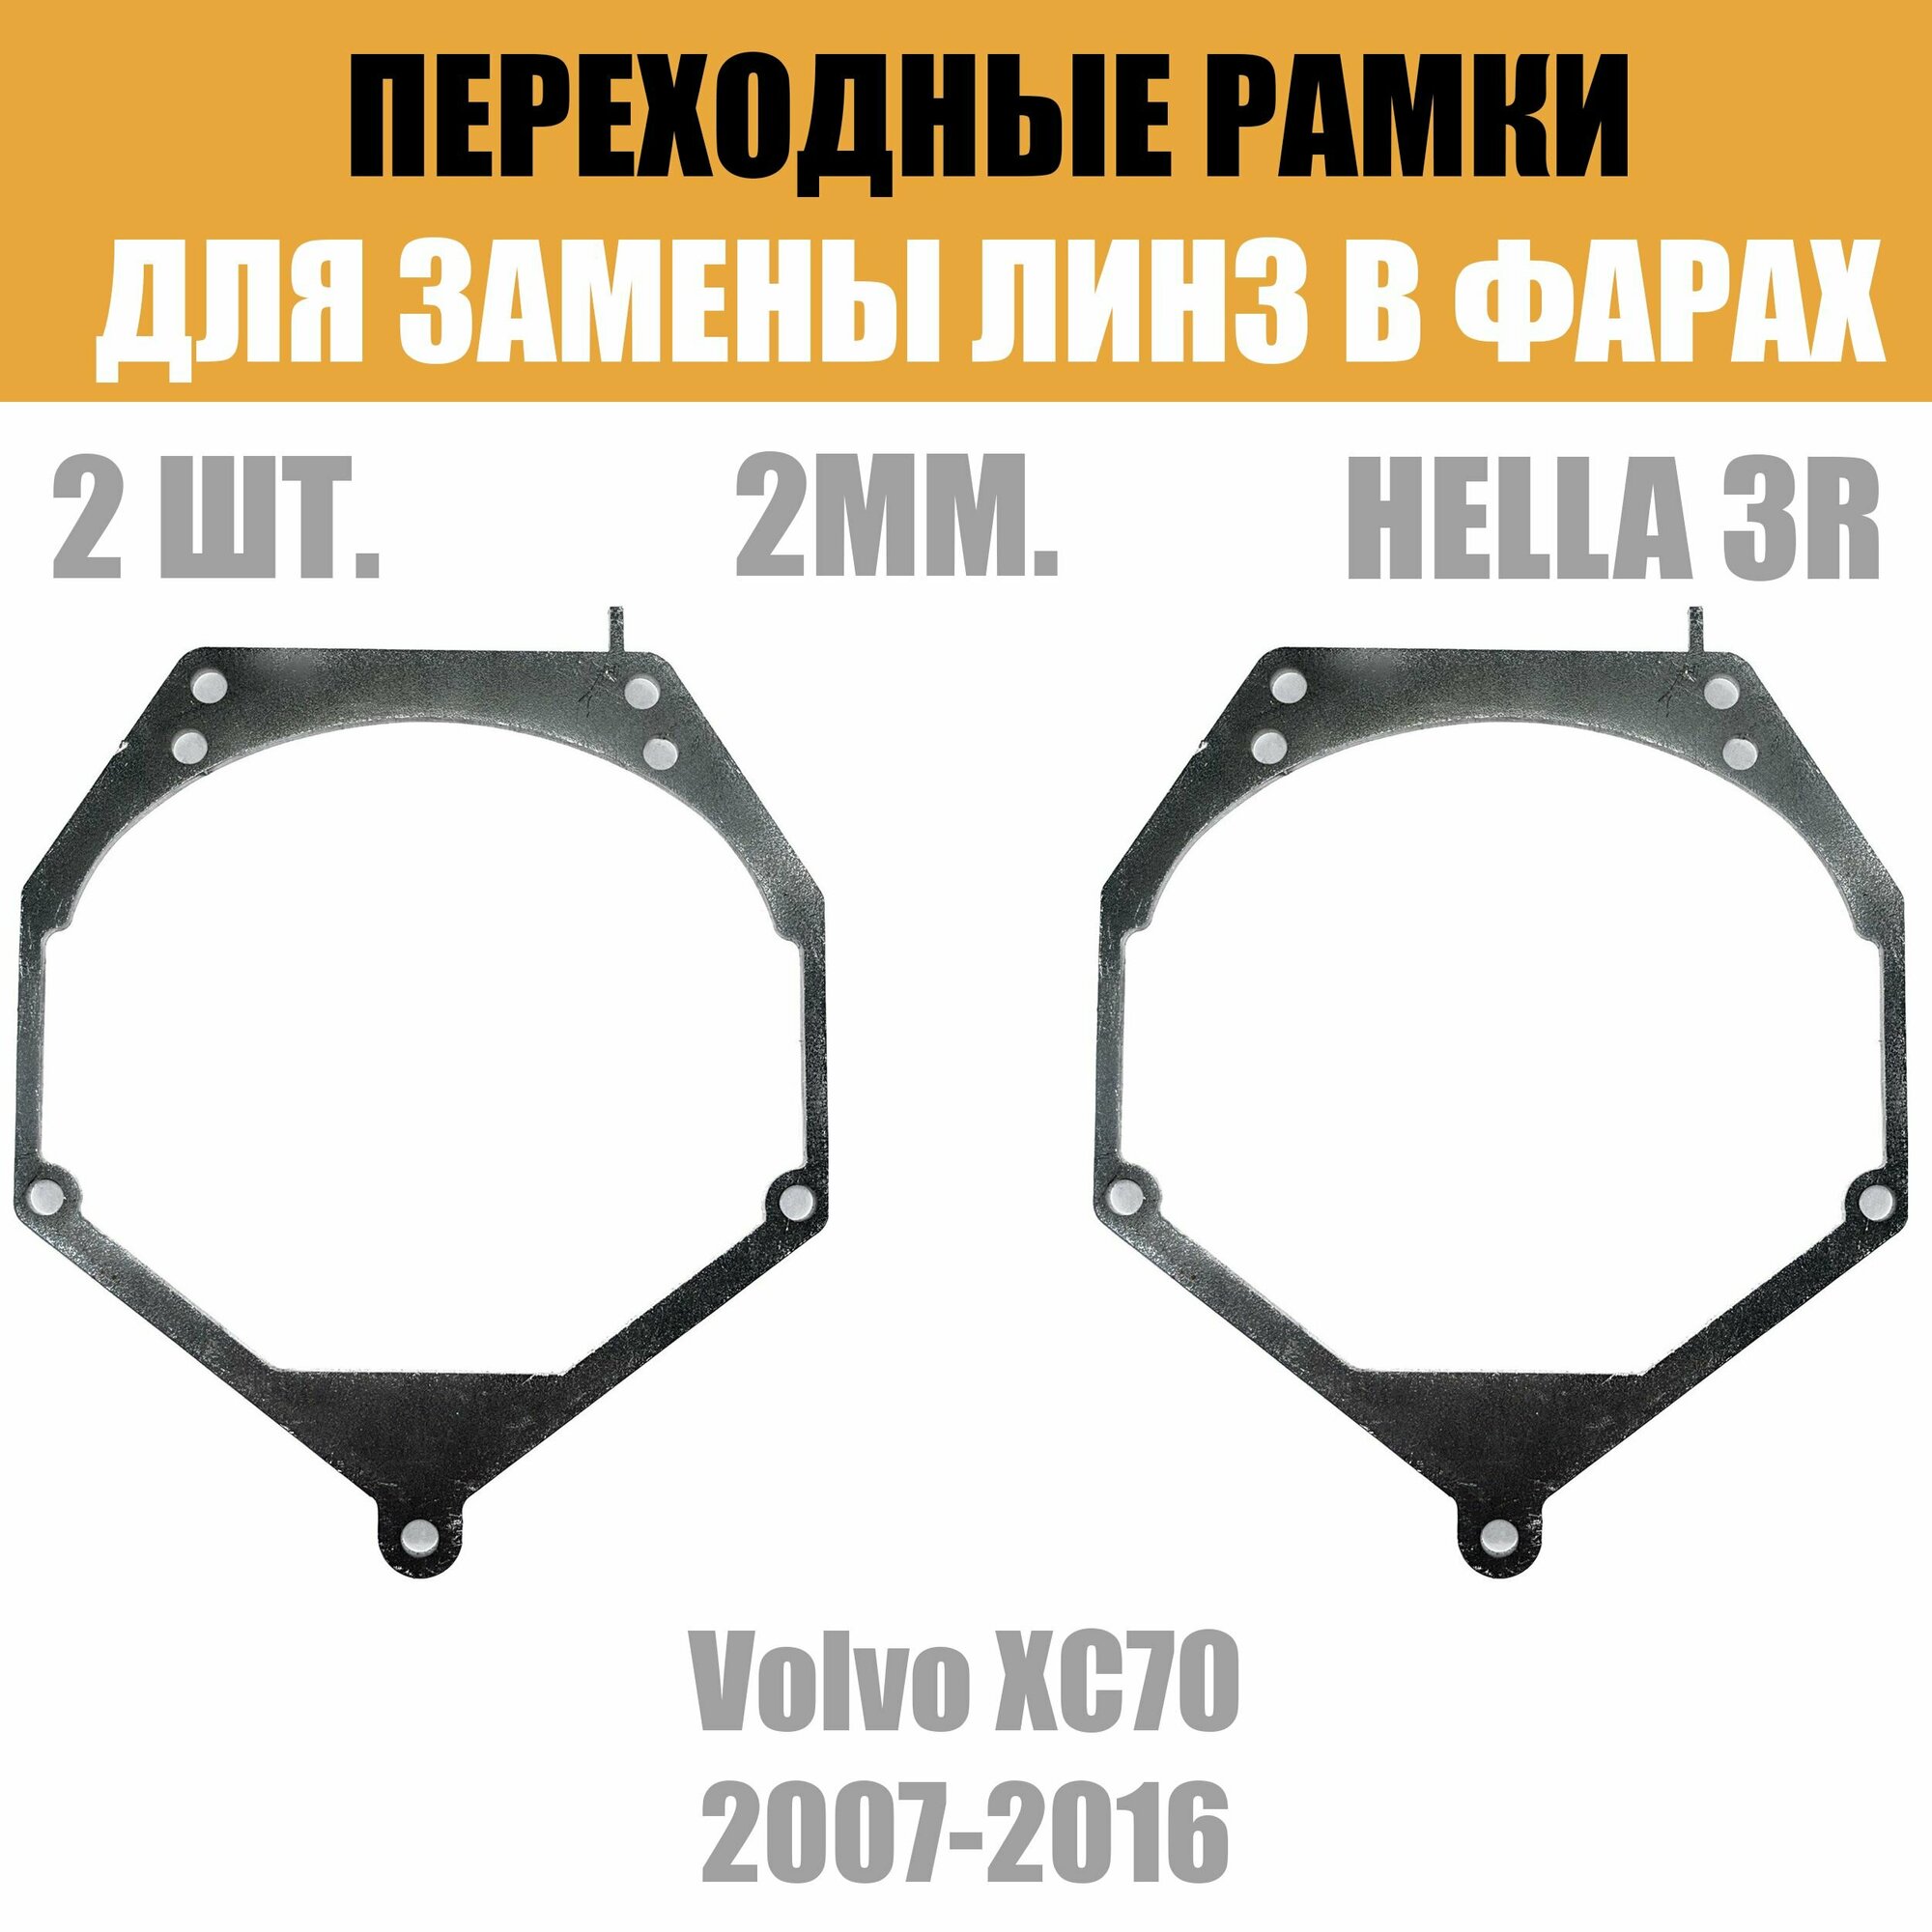 Переходные рамки для линз №55 на Volvo XC70 (2007-2016) под модуль Hella 3R/Hella 3 (Комплект 2шт)